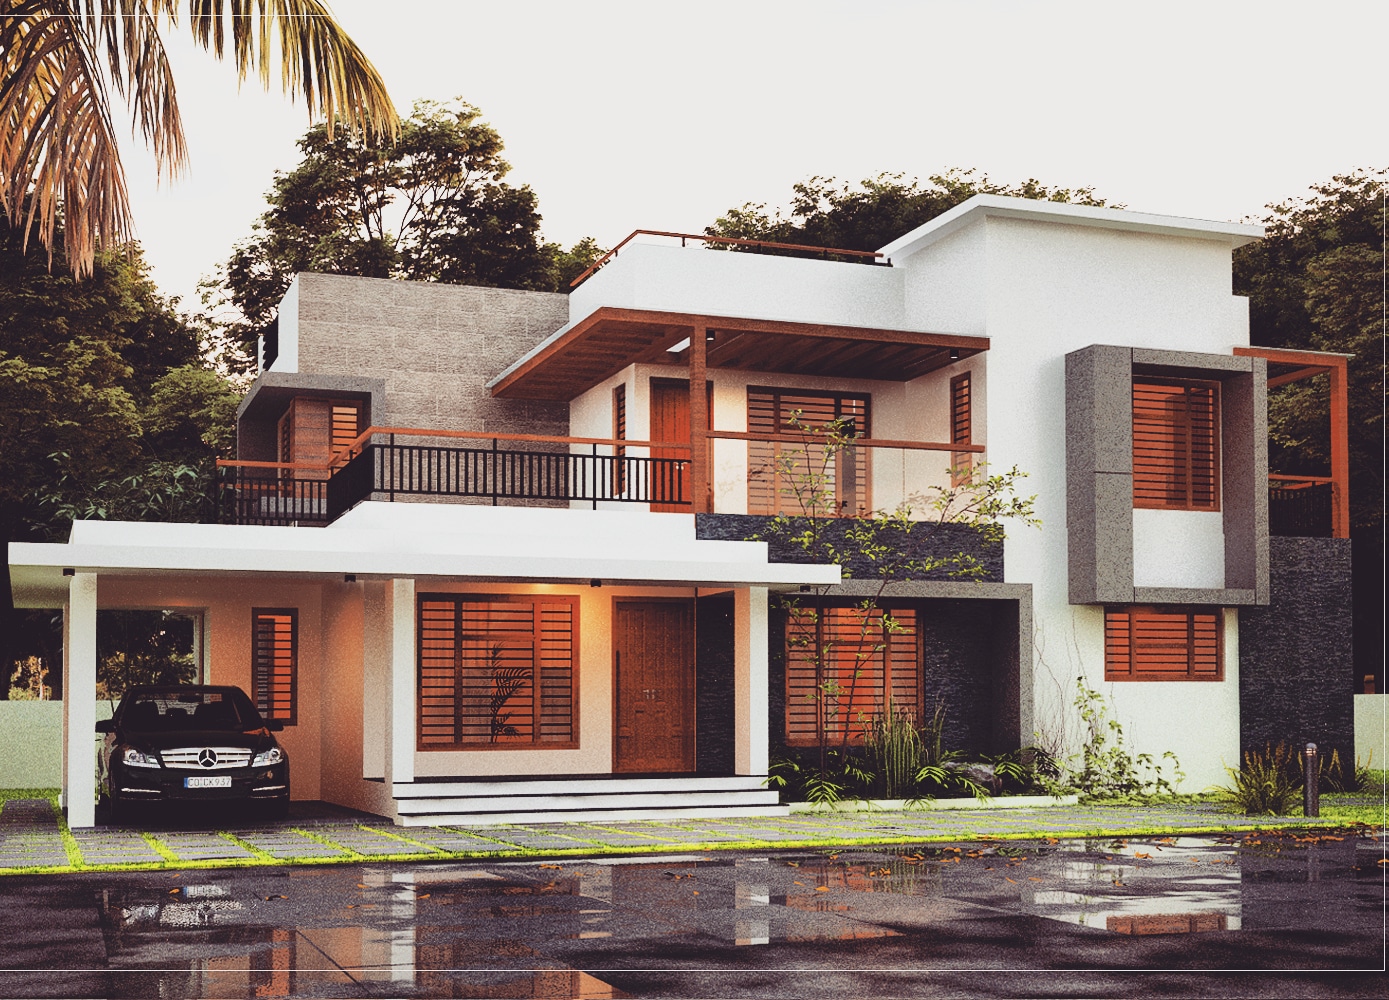  4  Bedroom  House  plans  2100 sq ft two floor Kerala  